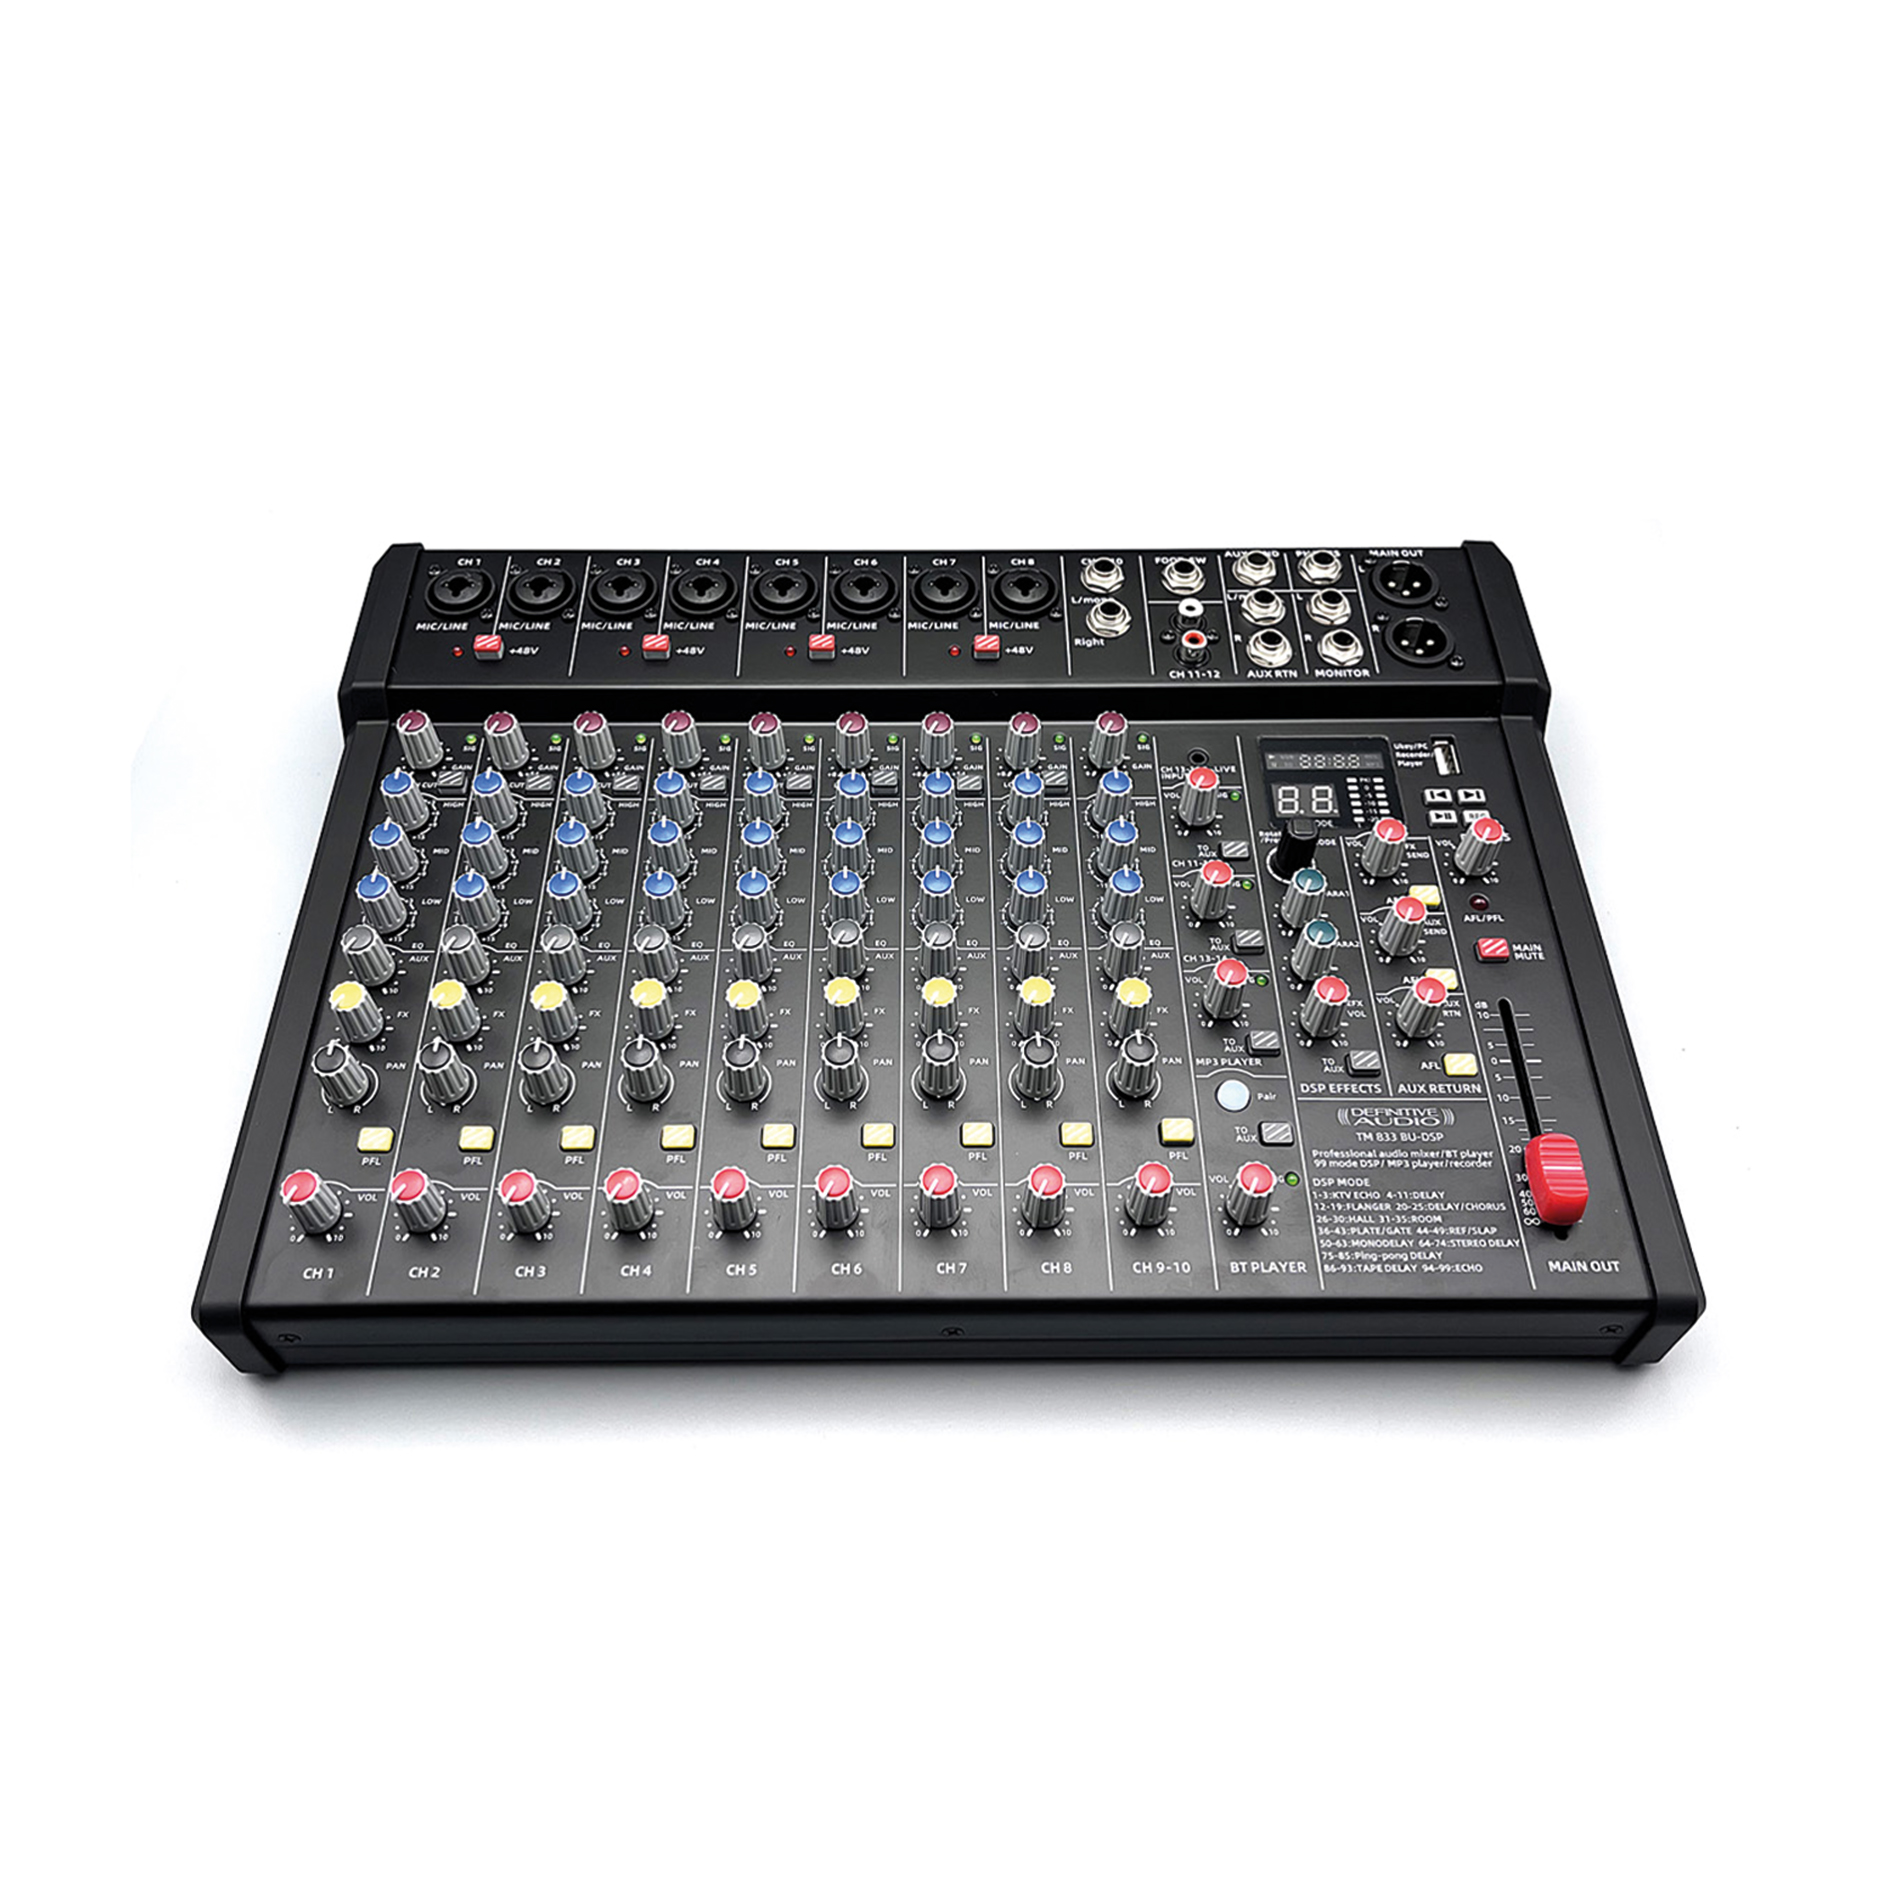 Definitive Audio Tm 833 Bu-dsp - Mesa de mezcla analógica - Variation 8